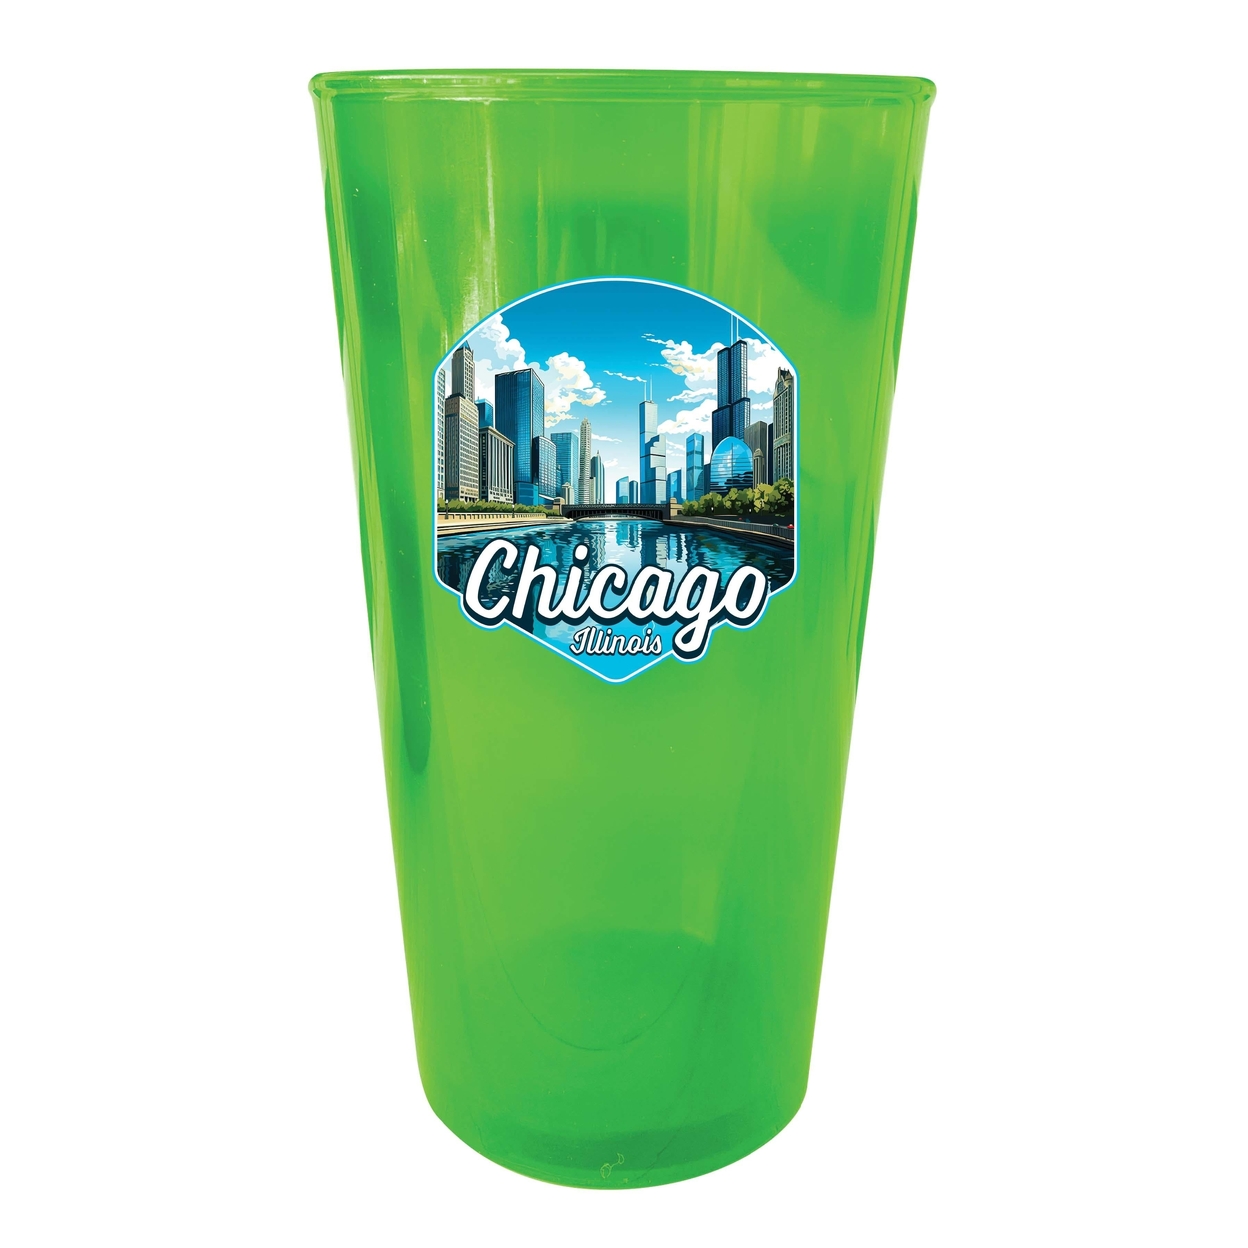 Chicago Illinois A Souvenir Plastic 16 Oz Pint - Green,,2-Pack